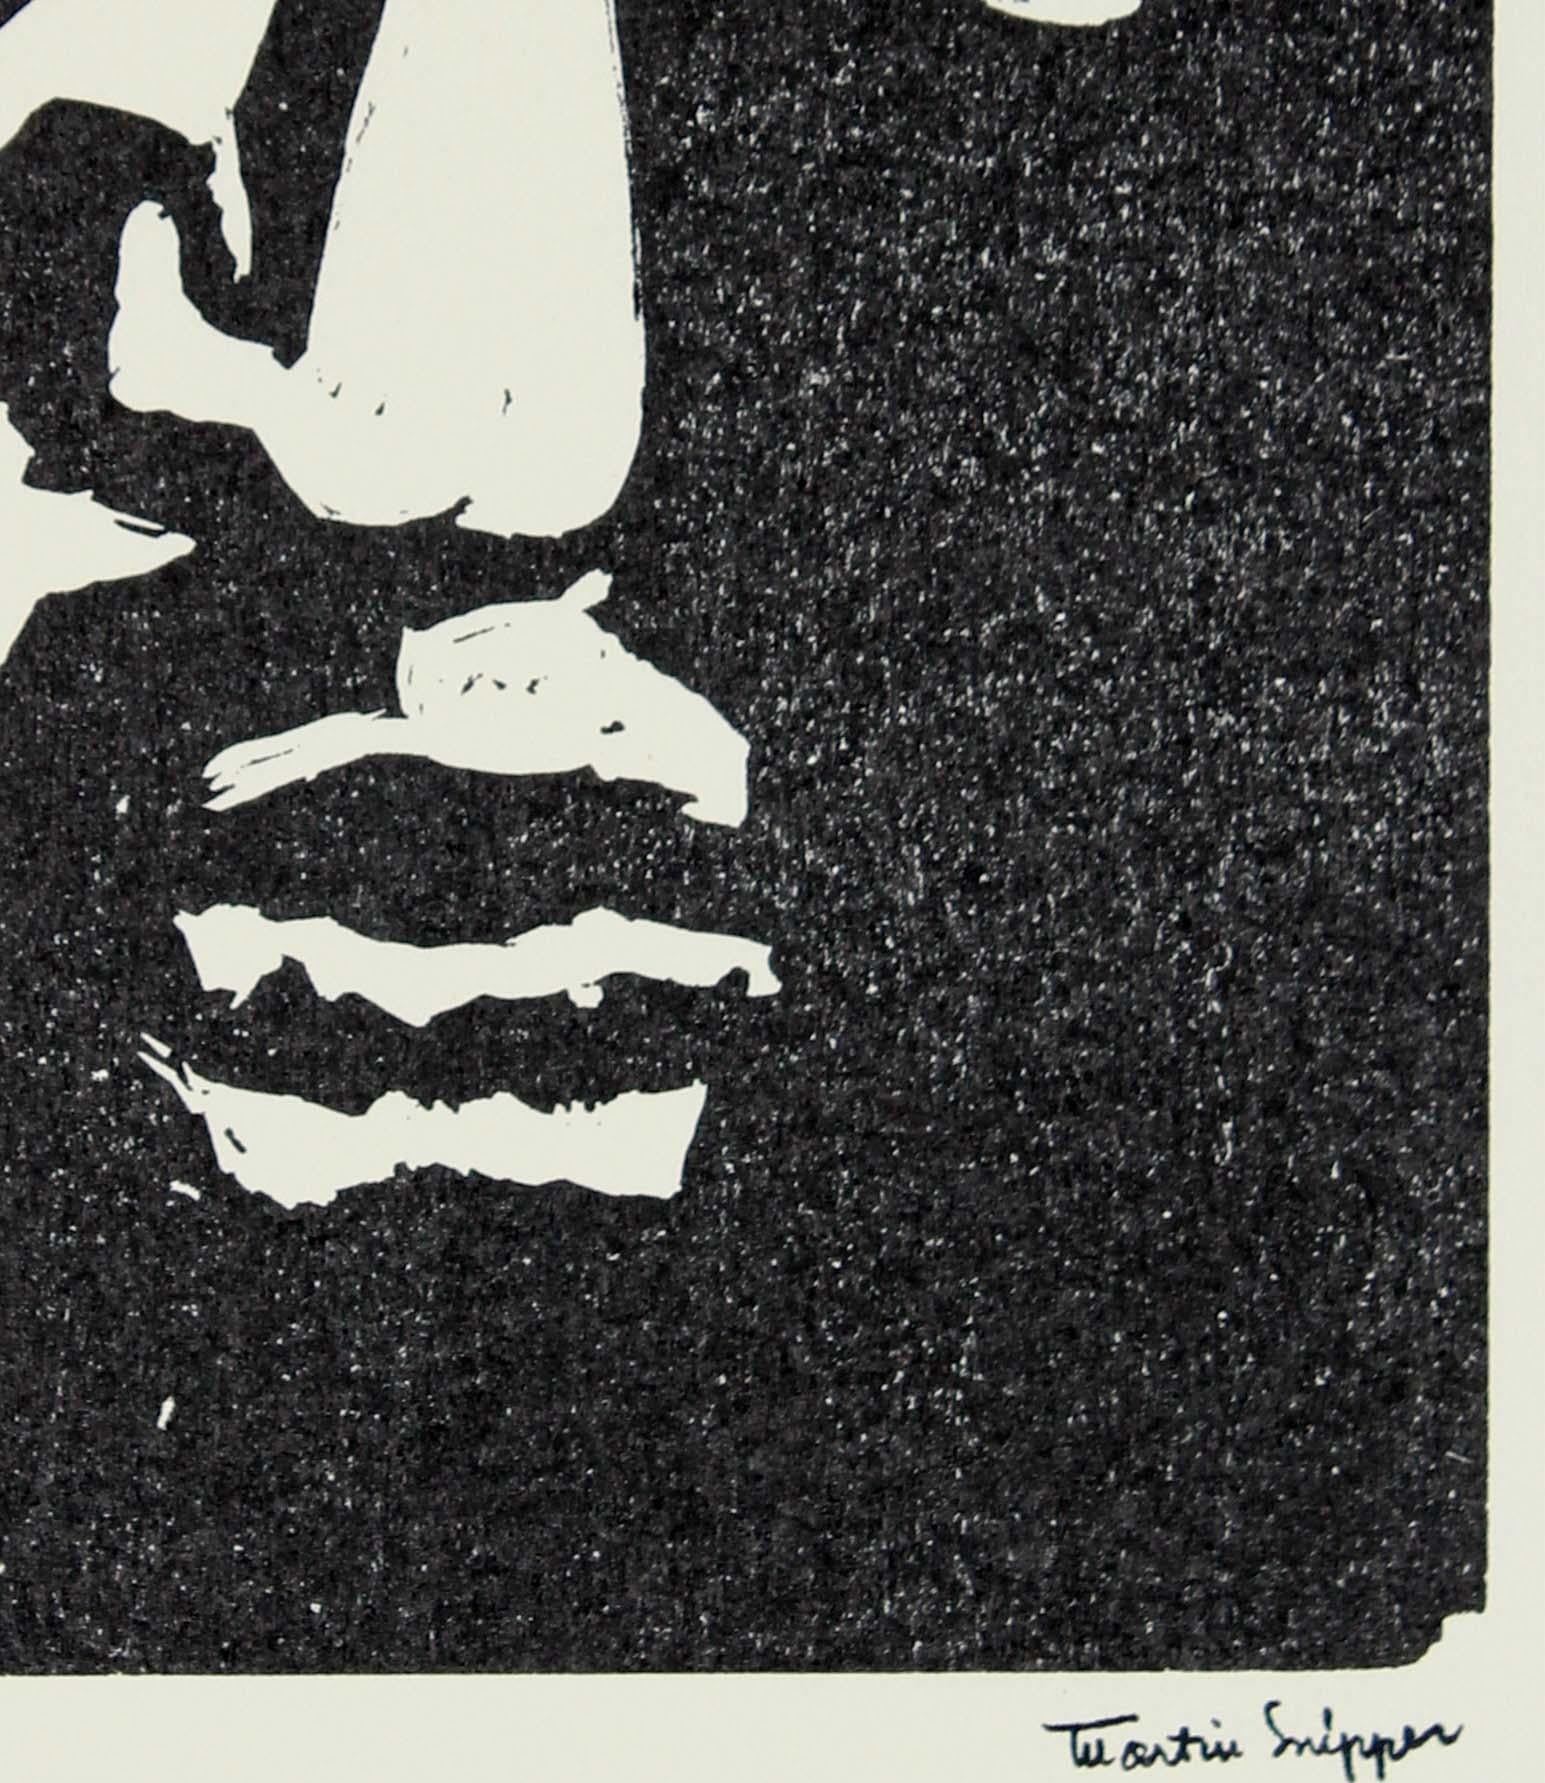 20th Century Posthumous Linoluem Block Print - Black Figurative Print by Martin Snipper